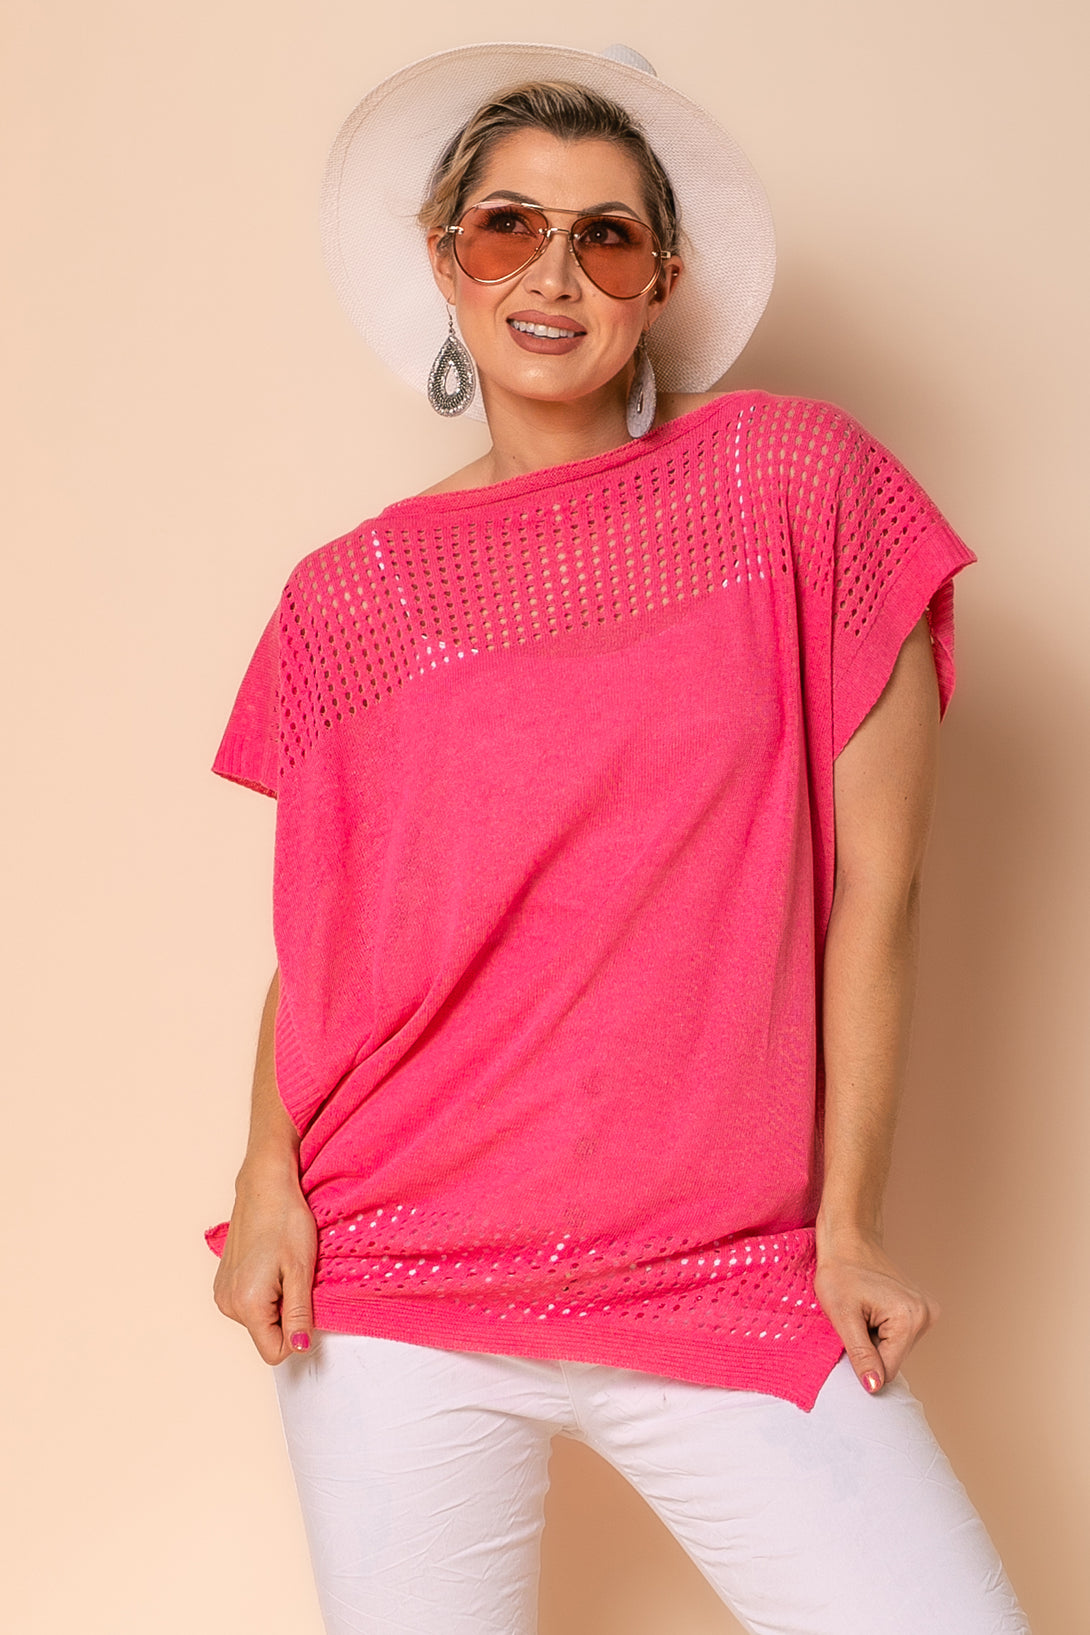 Pele Cotton Blend Poncho in Raspberry Sorbet - Imagine Fashion